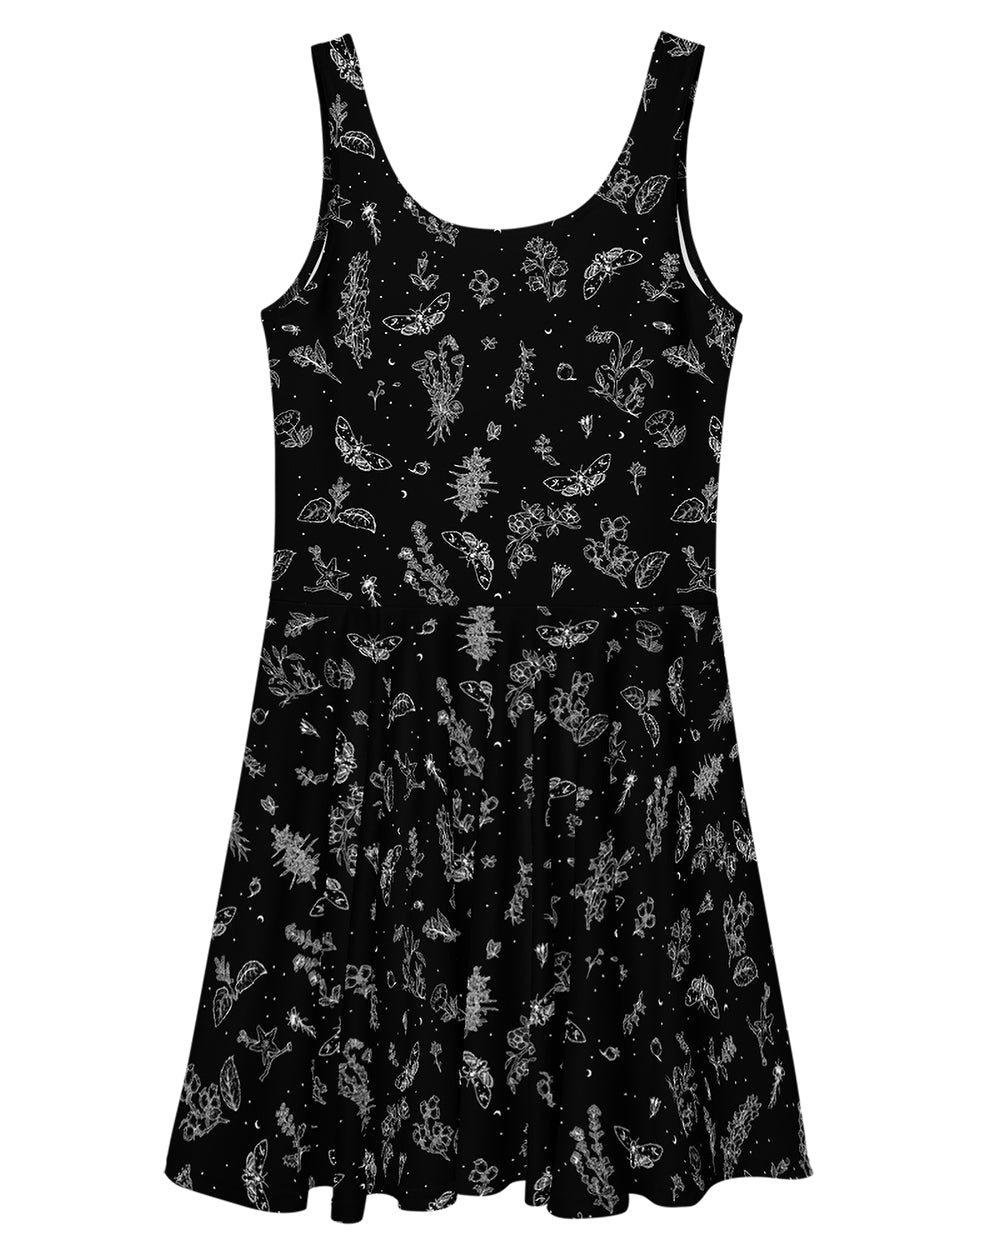 Nightshade Skater Dress -  Cute Black Goth Dress Dark Academia Cottagecore Black & White Floral Pattern Witchy